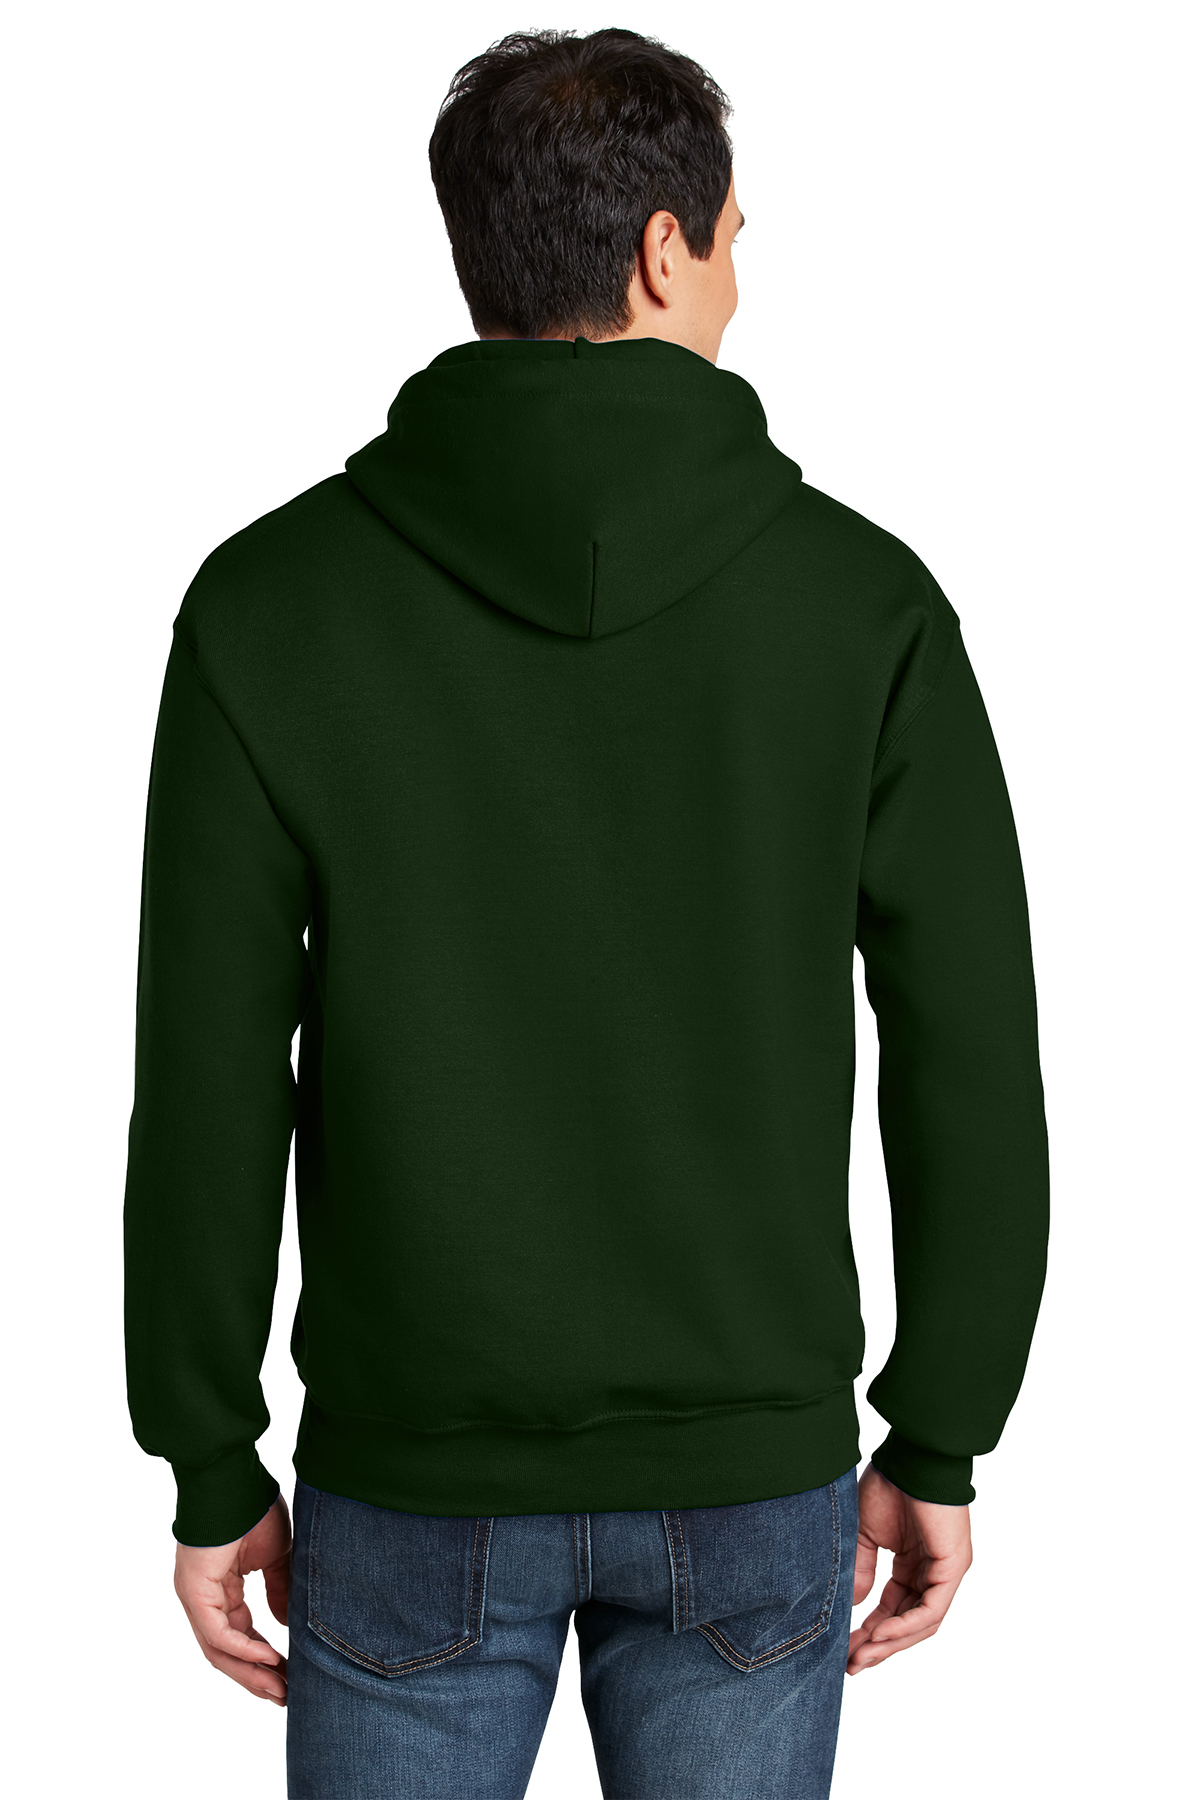 Hooded Company Casuals | Pullover - Sweatshirt Gildan | DryBlend Product